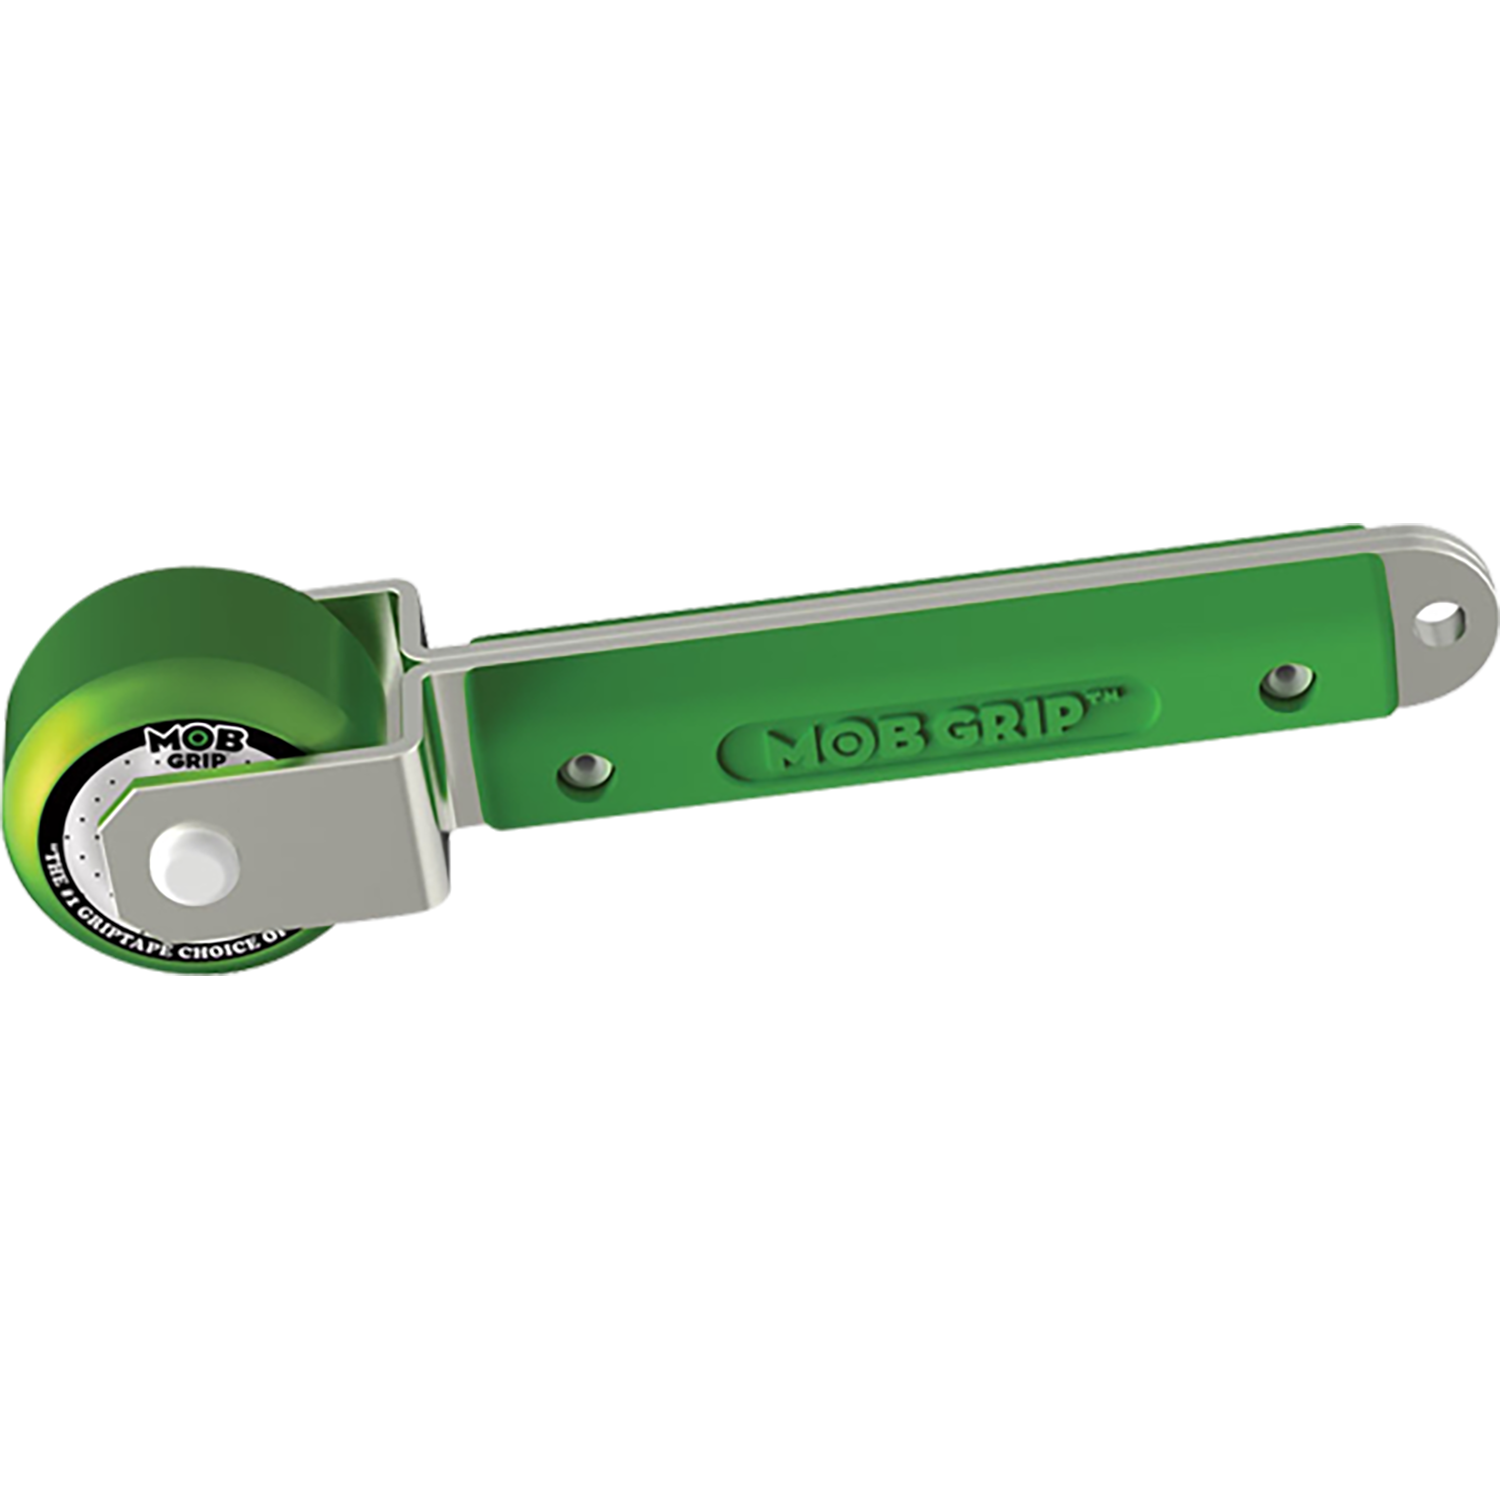 Mob Griptape Roller Tool Green